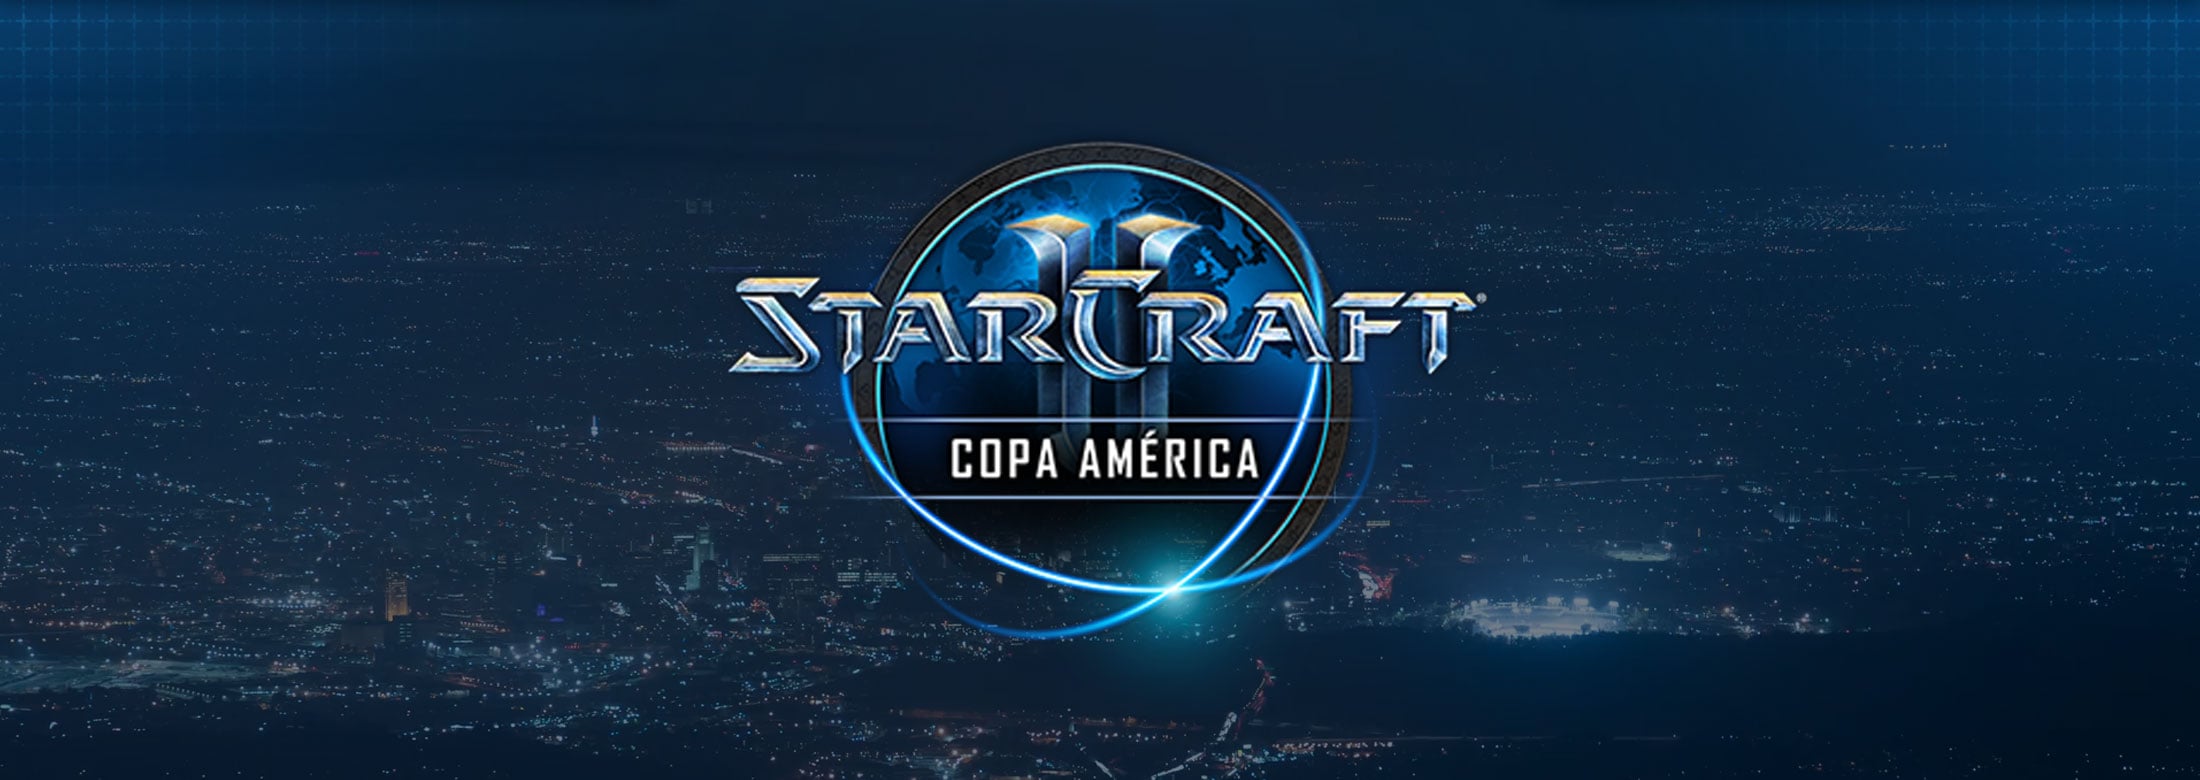 ¡Mira la 1ª temporada de la Copa América de StarCraft II 2019!	